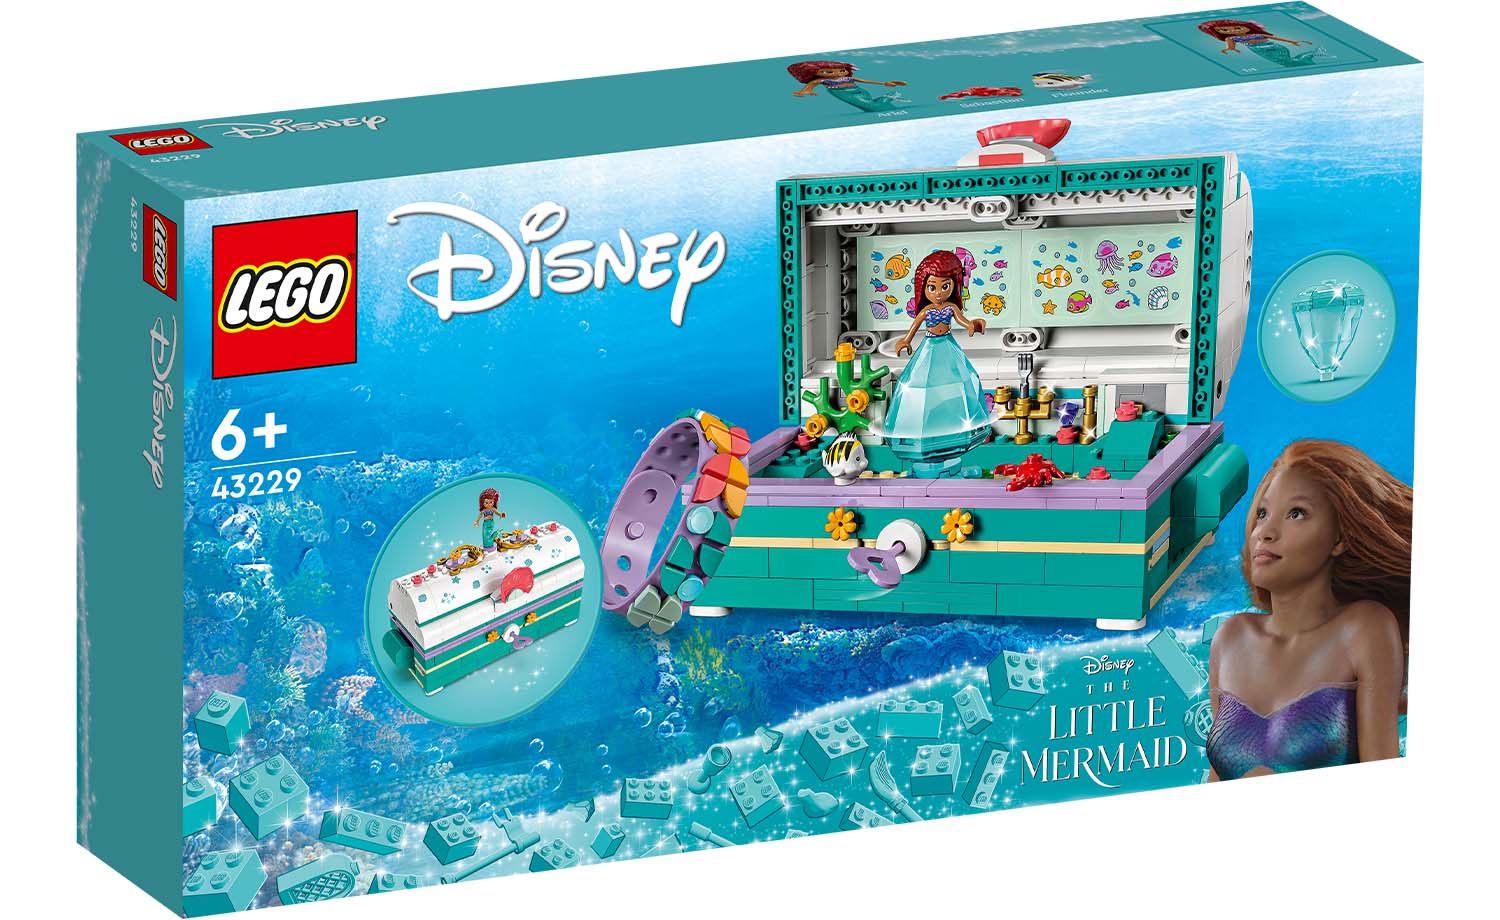 Lego DUPLO Disney Princess Collection 10596 ARIEL -Snow White (Complete  Pieces)